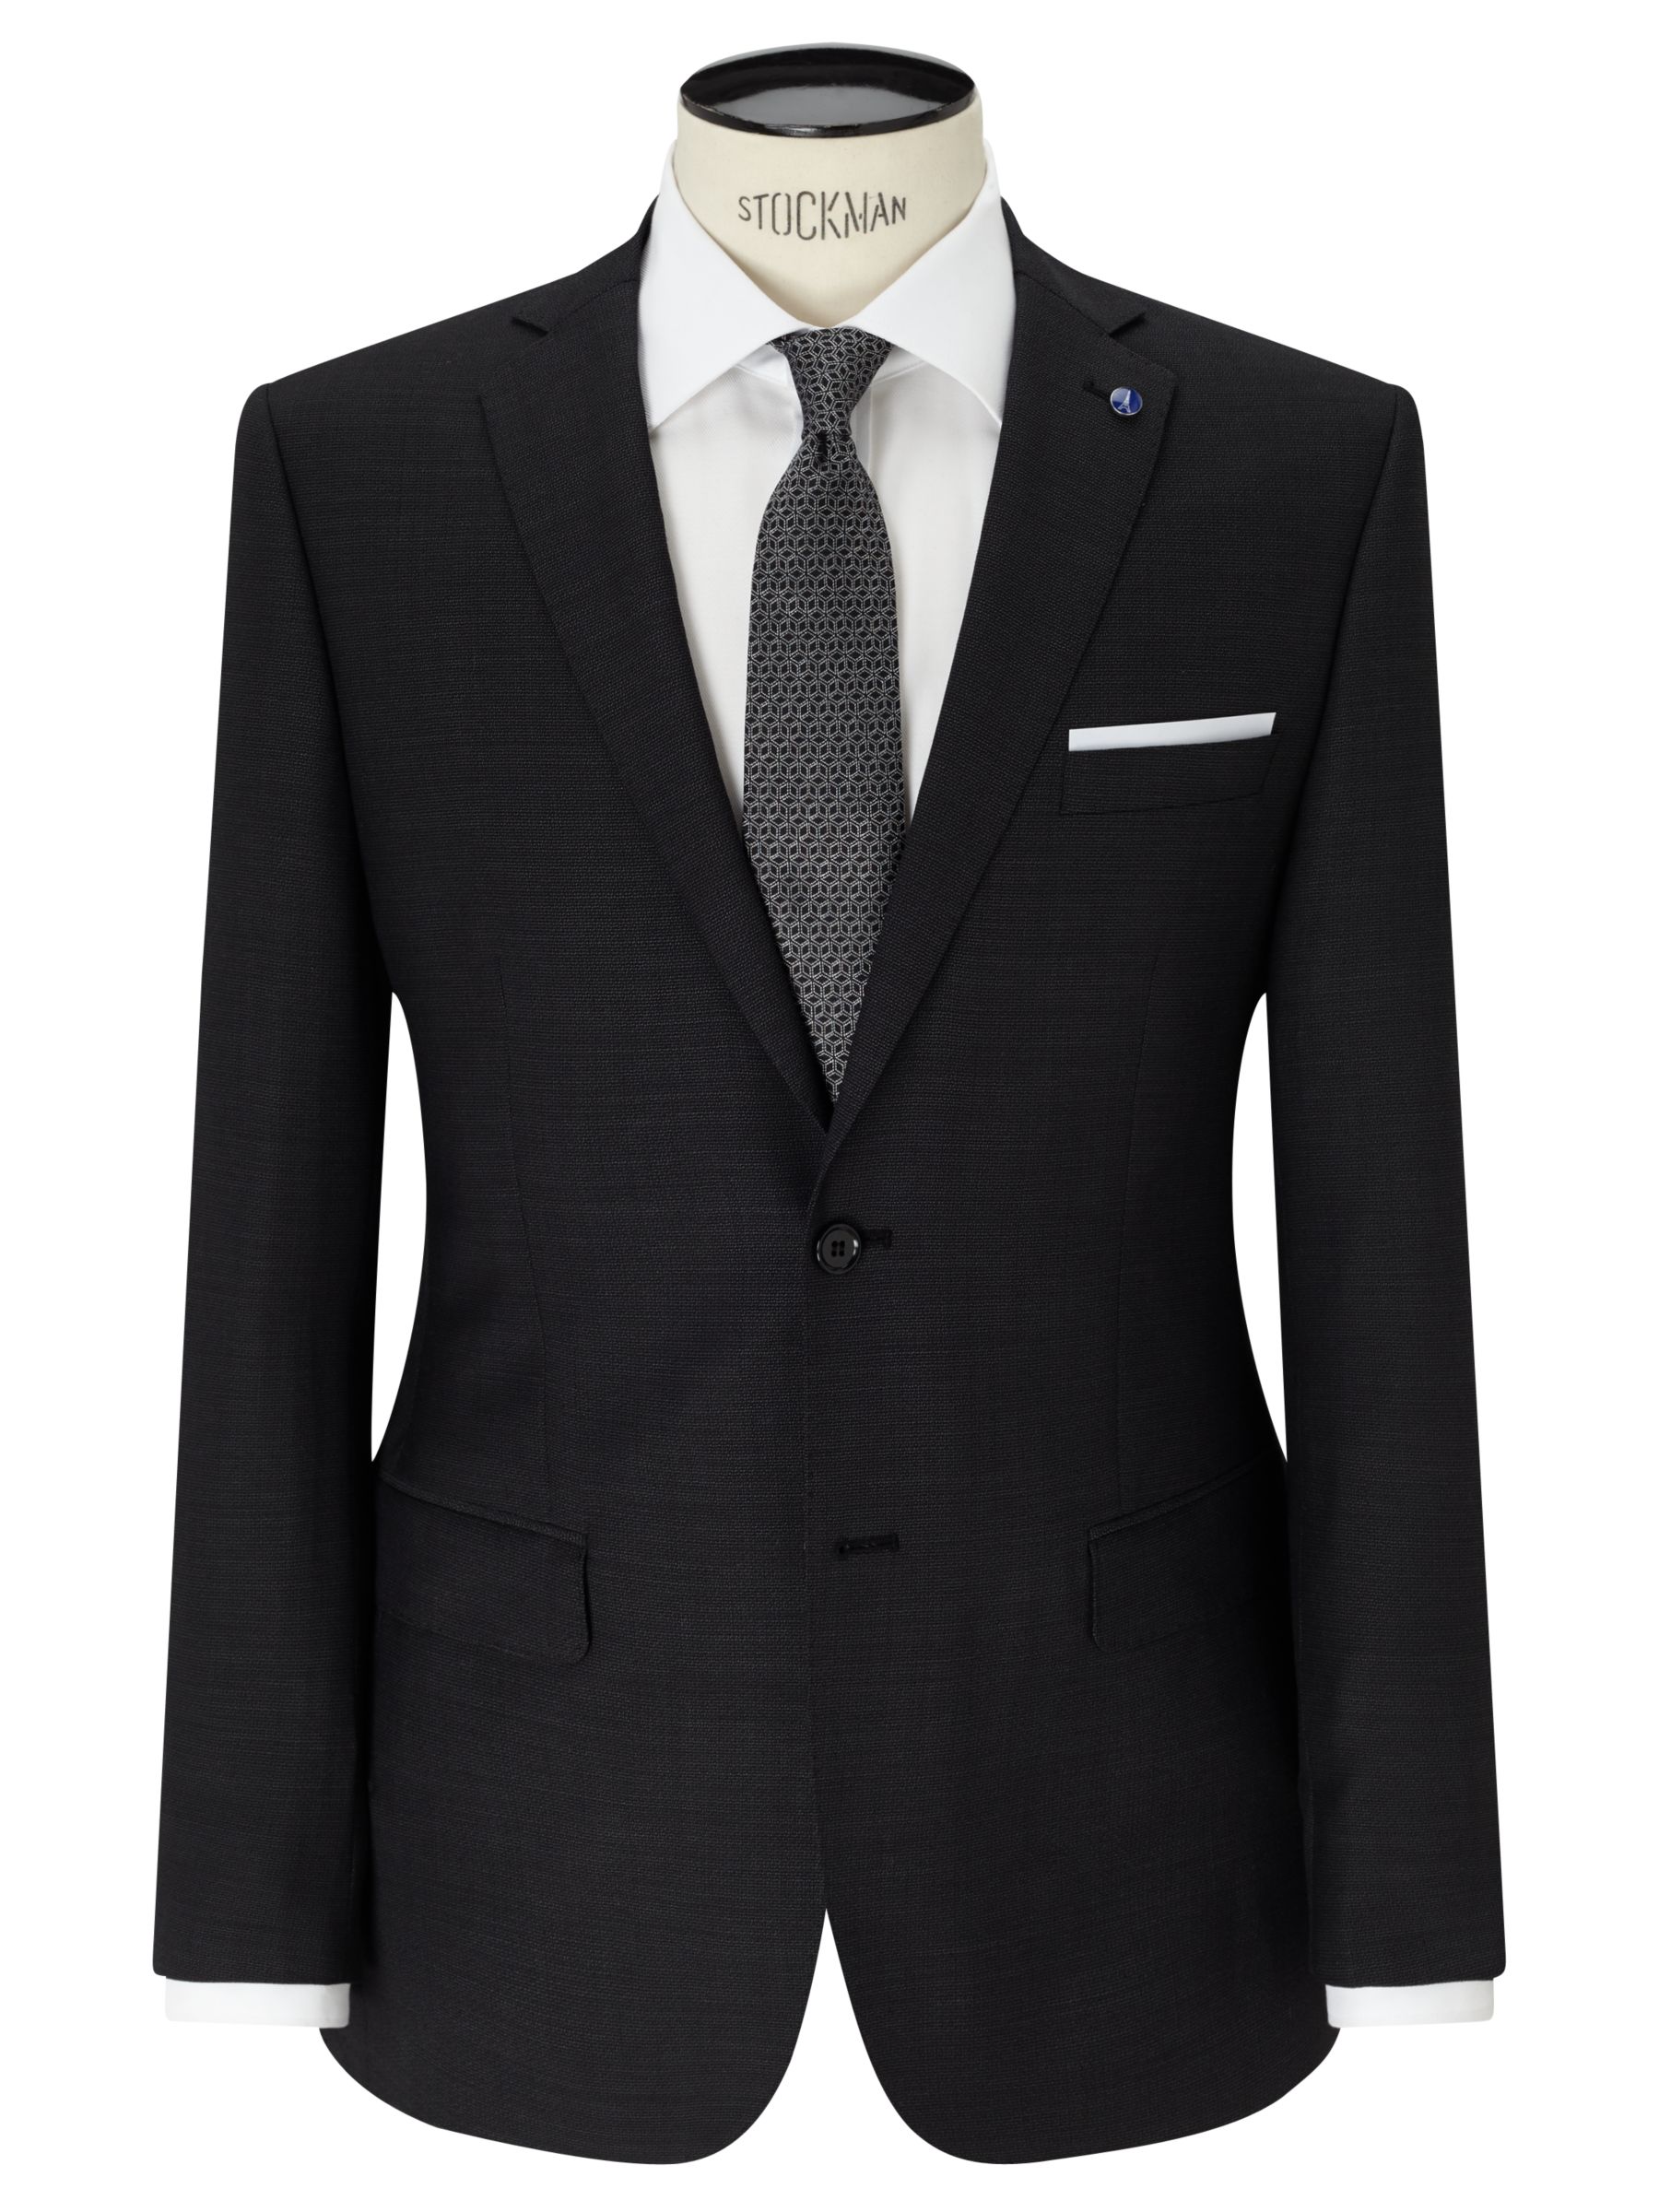 Men's Suits | Regular, Tailored, Slim Fit Suits | John Lewis